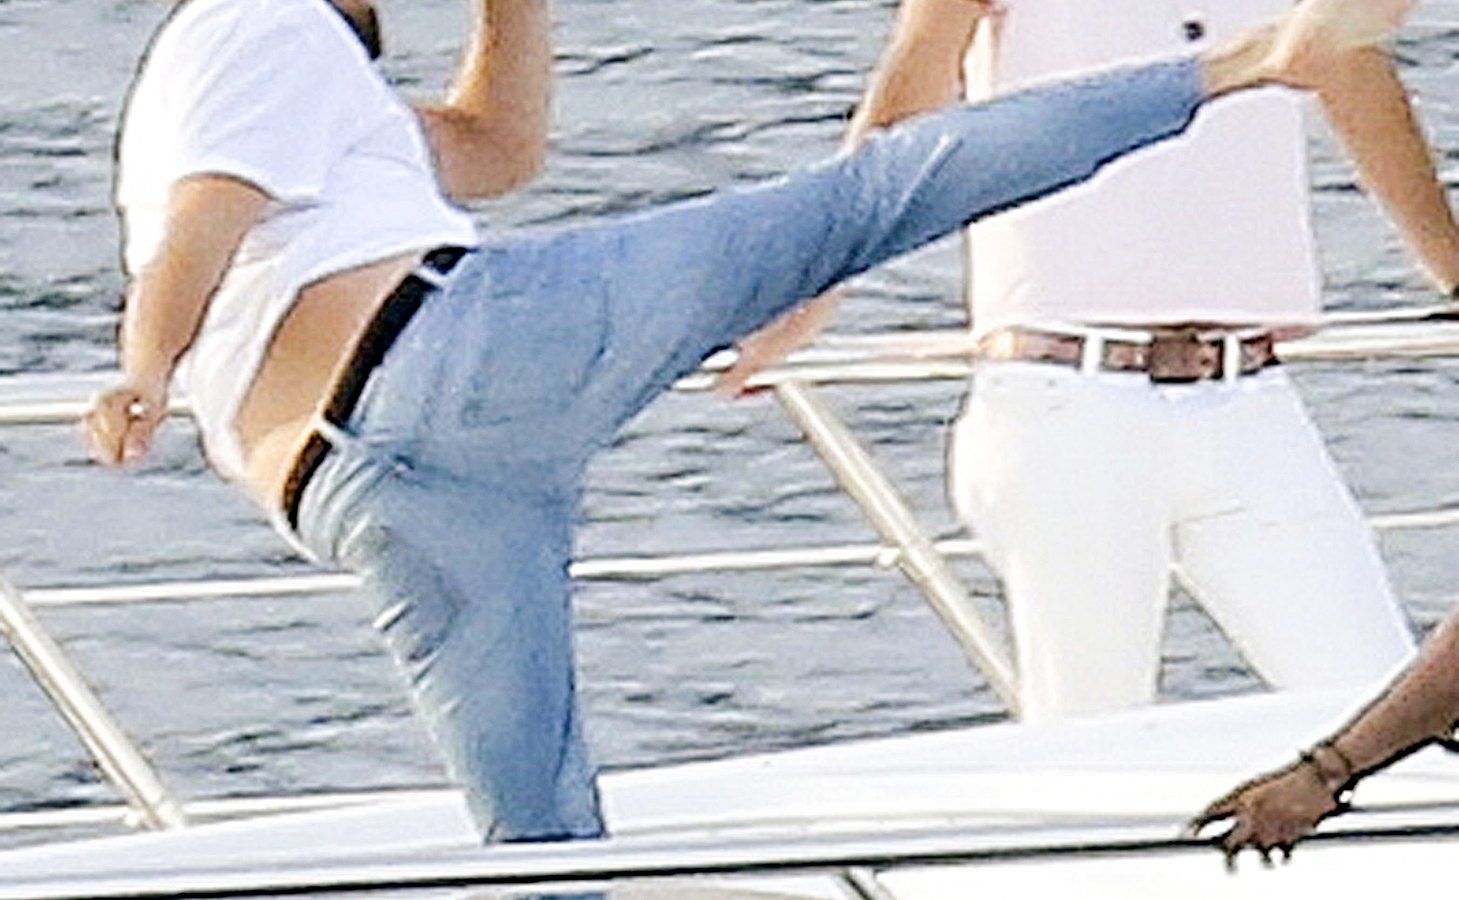 Leonardo DiCaprio doing karate on a yacht in St. Tropez